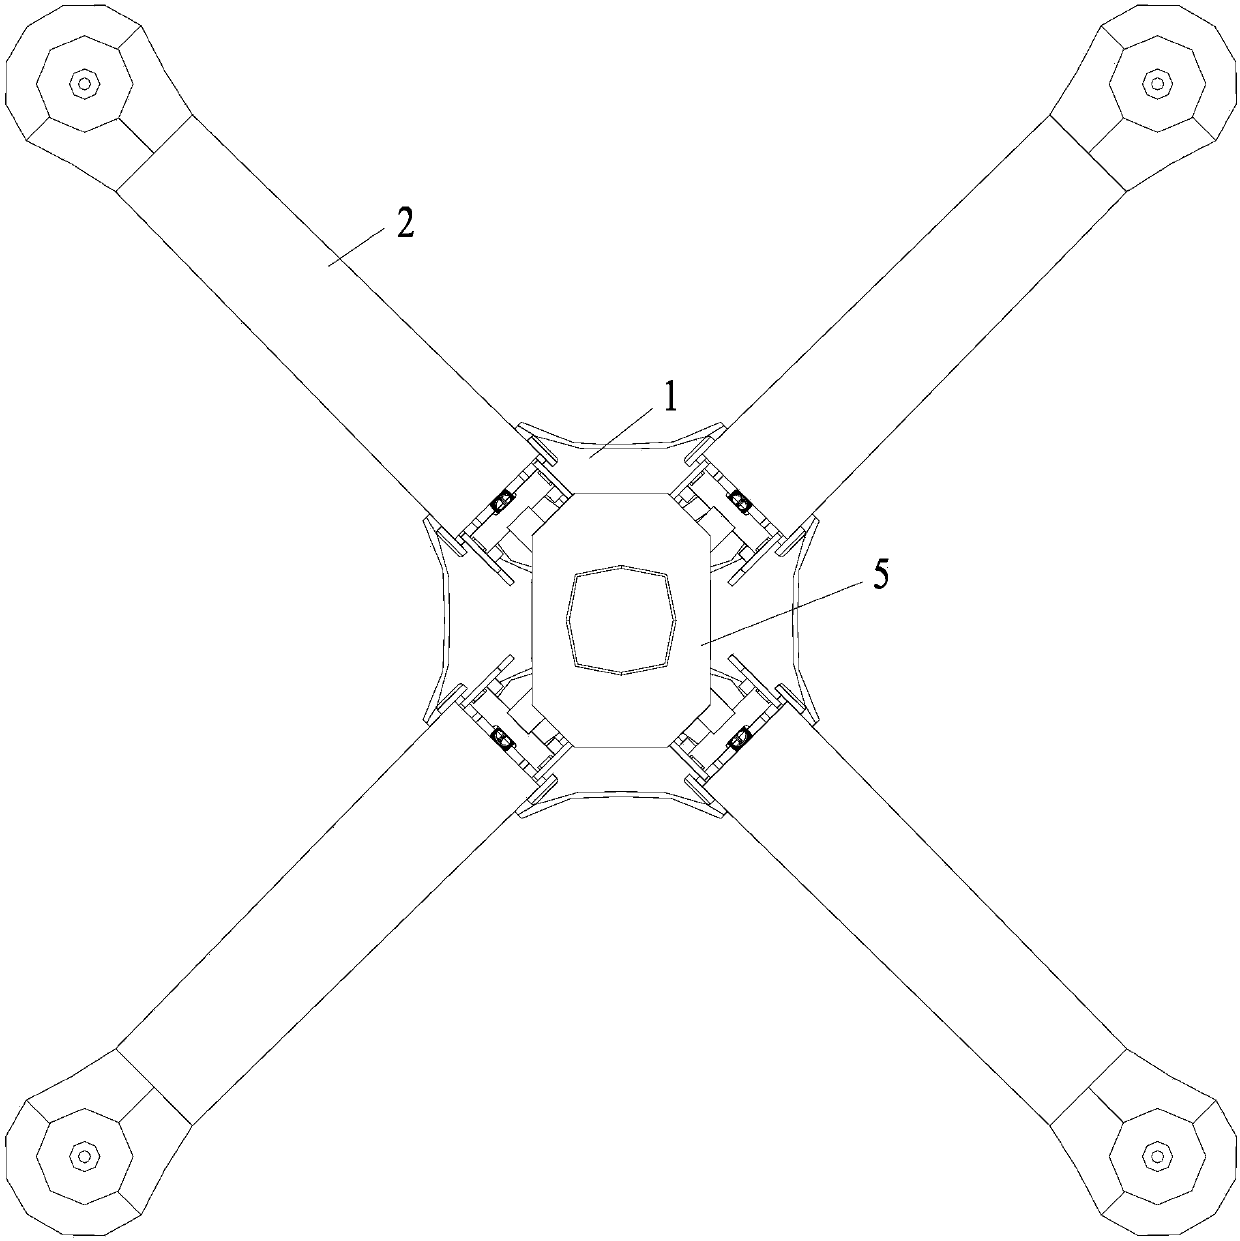 UAV with multi-arm synchronous folding mechanism